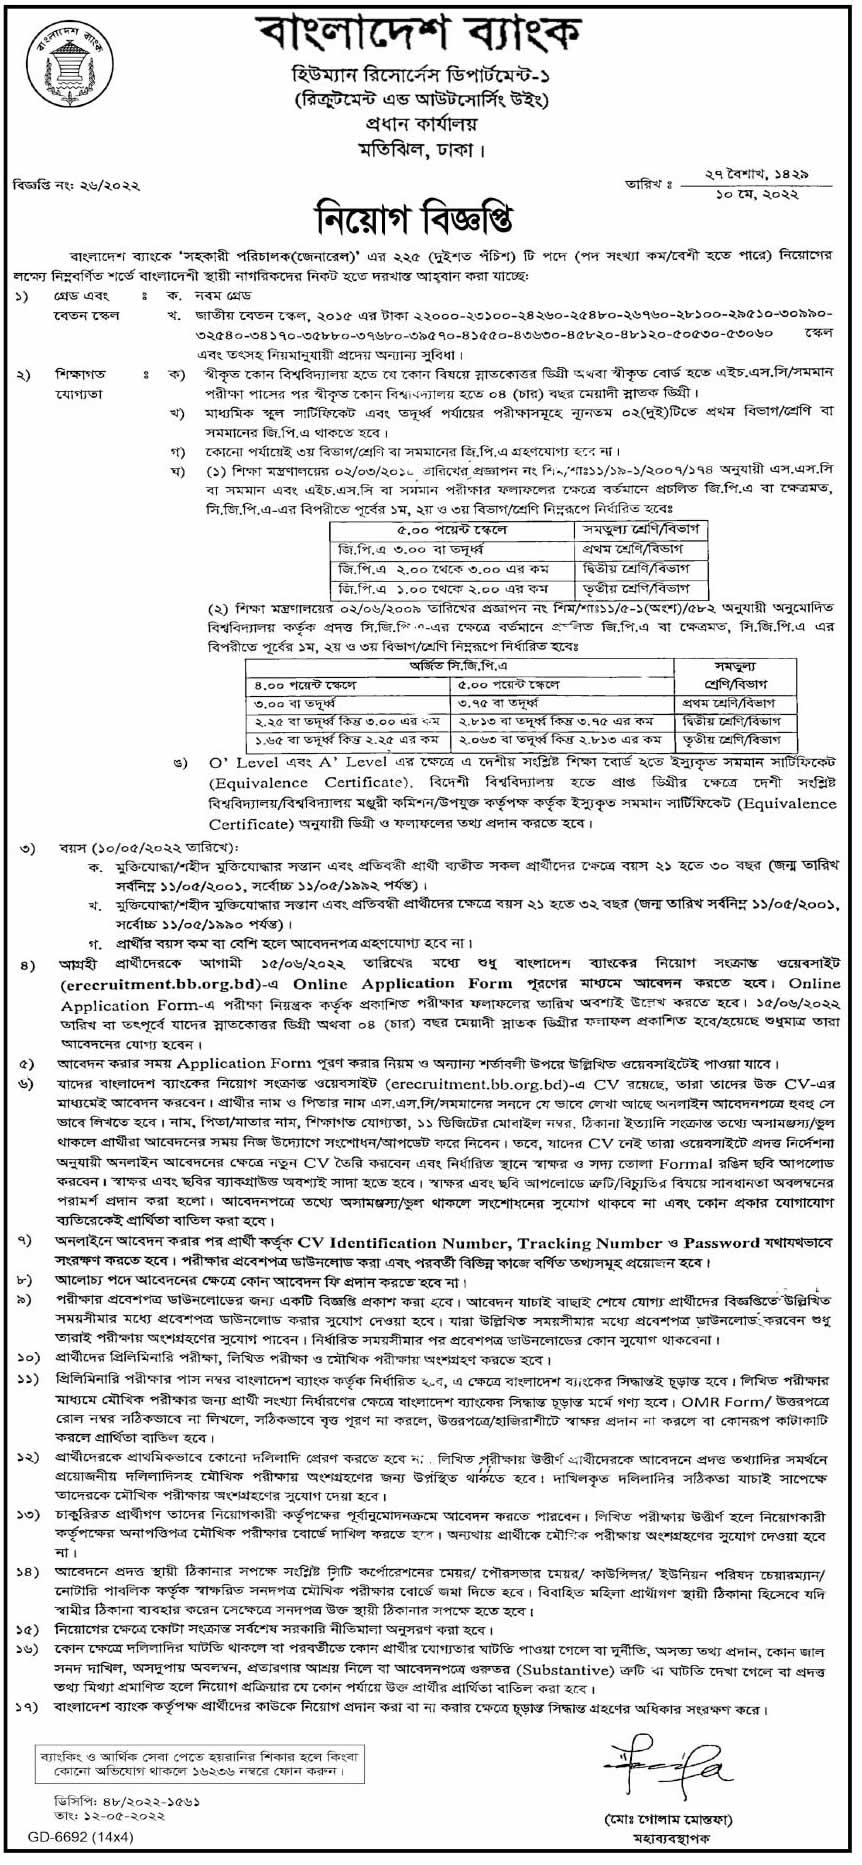 Bangladesh Bank Limited Job Circular 2022: www.bb.org.bd